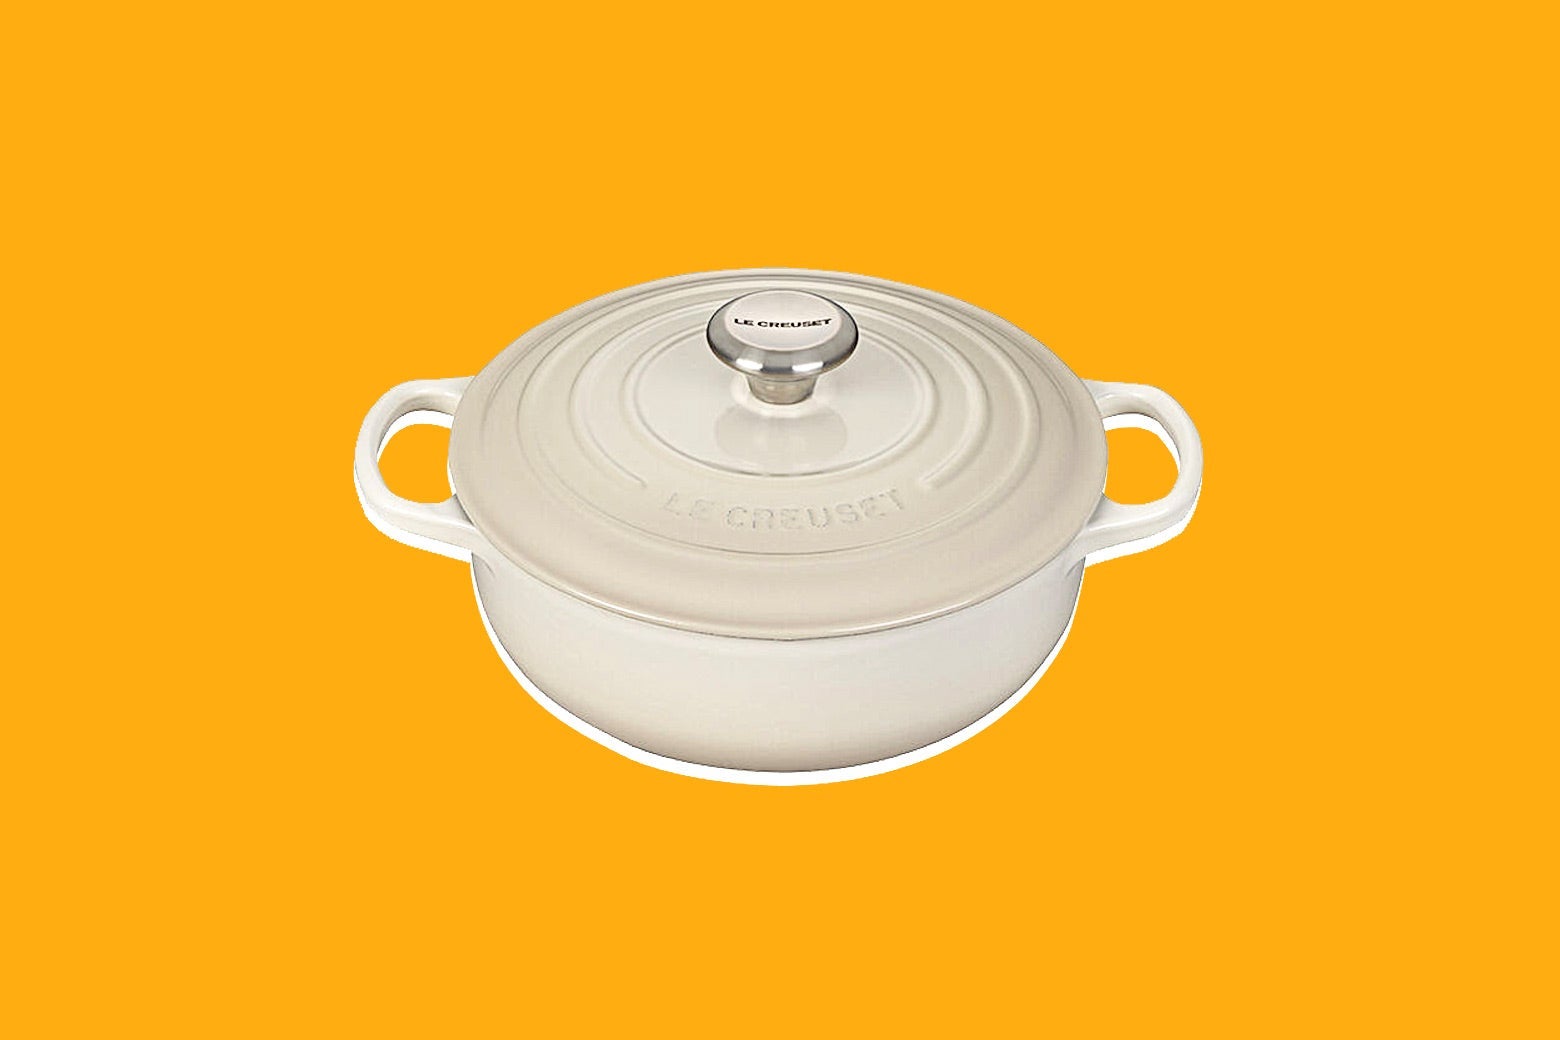 A Le Creuset sauce pot seen against yellow background